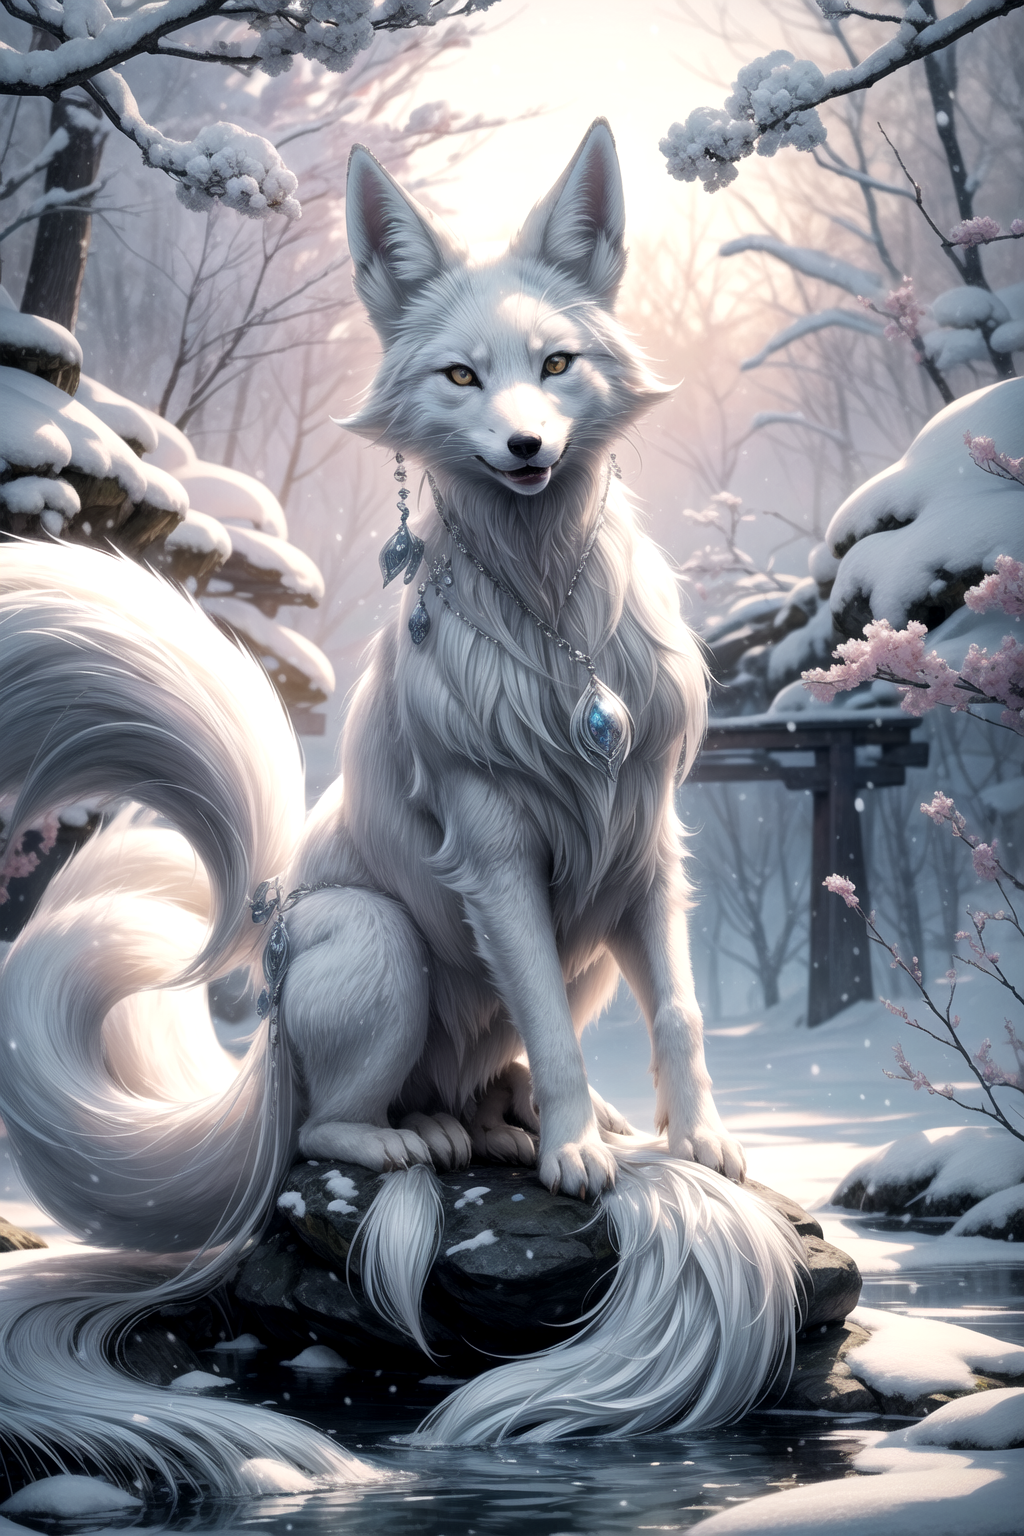 anime white fox demon